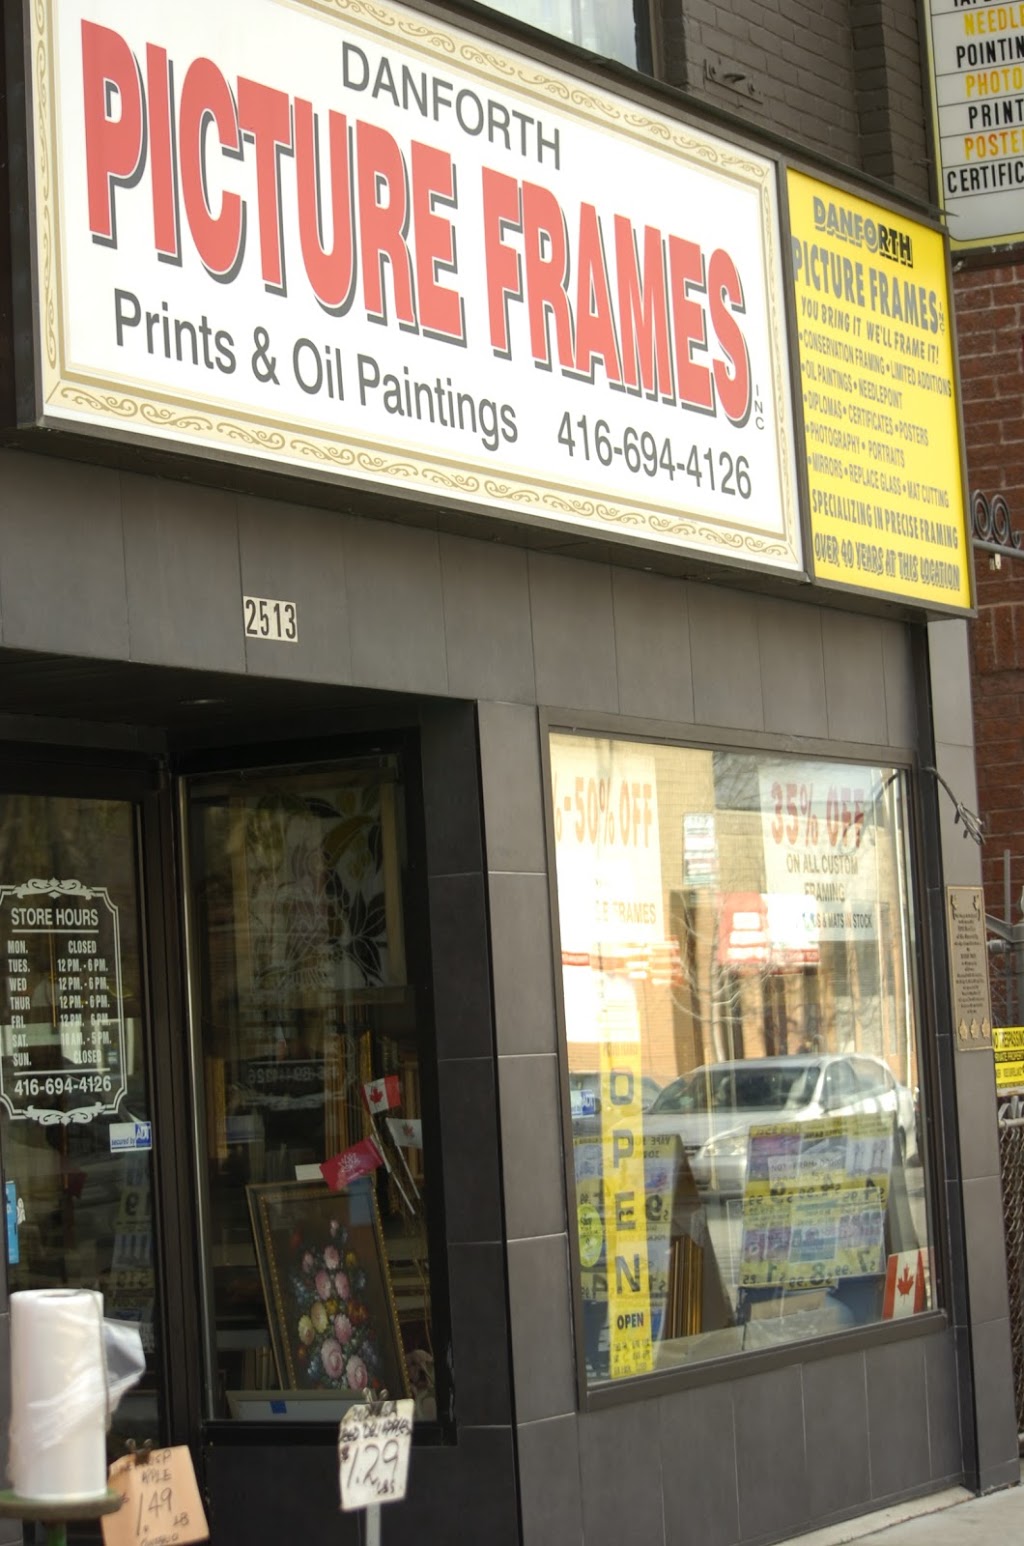 Danforth Picture Frames Inc | furniture store | 2513 Danforth Av, Toronto, ON M4C 1L1, Canada | 4166944126 OR +1 416-694-4126